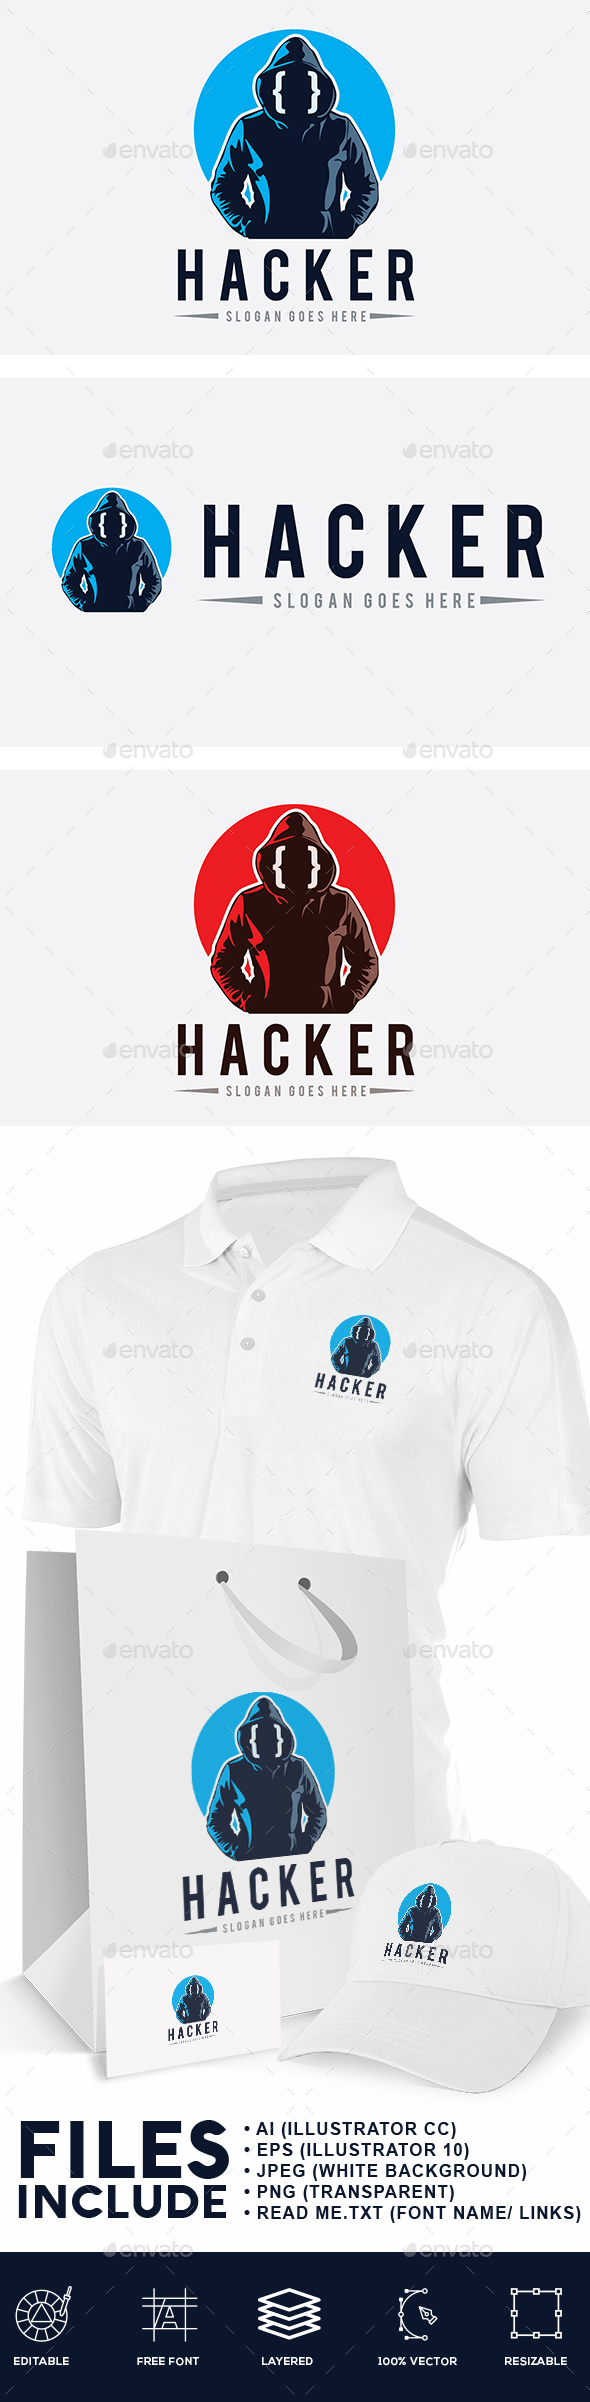 Hacker Man Logo